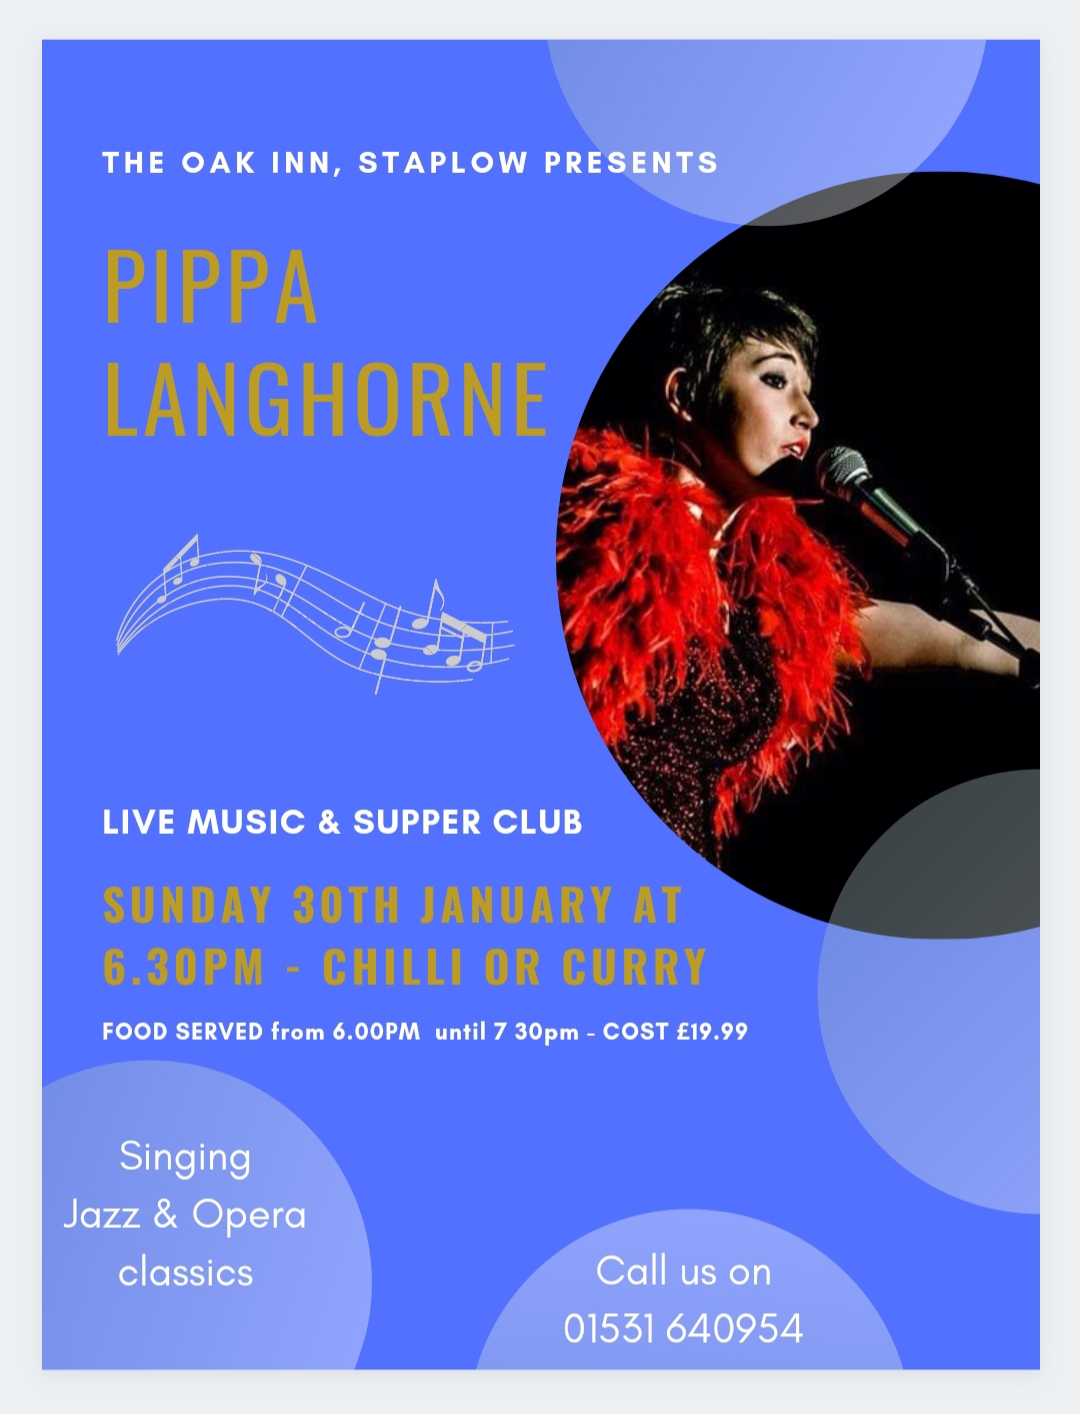 Live music by PIPPA LANGHORNE